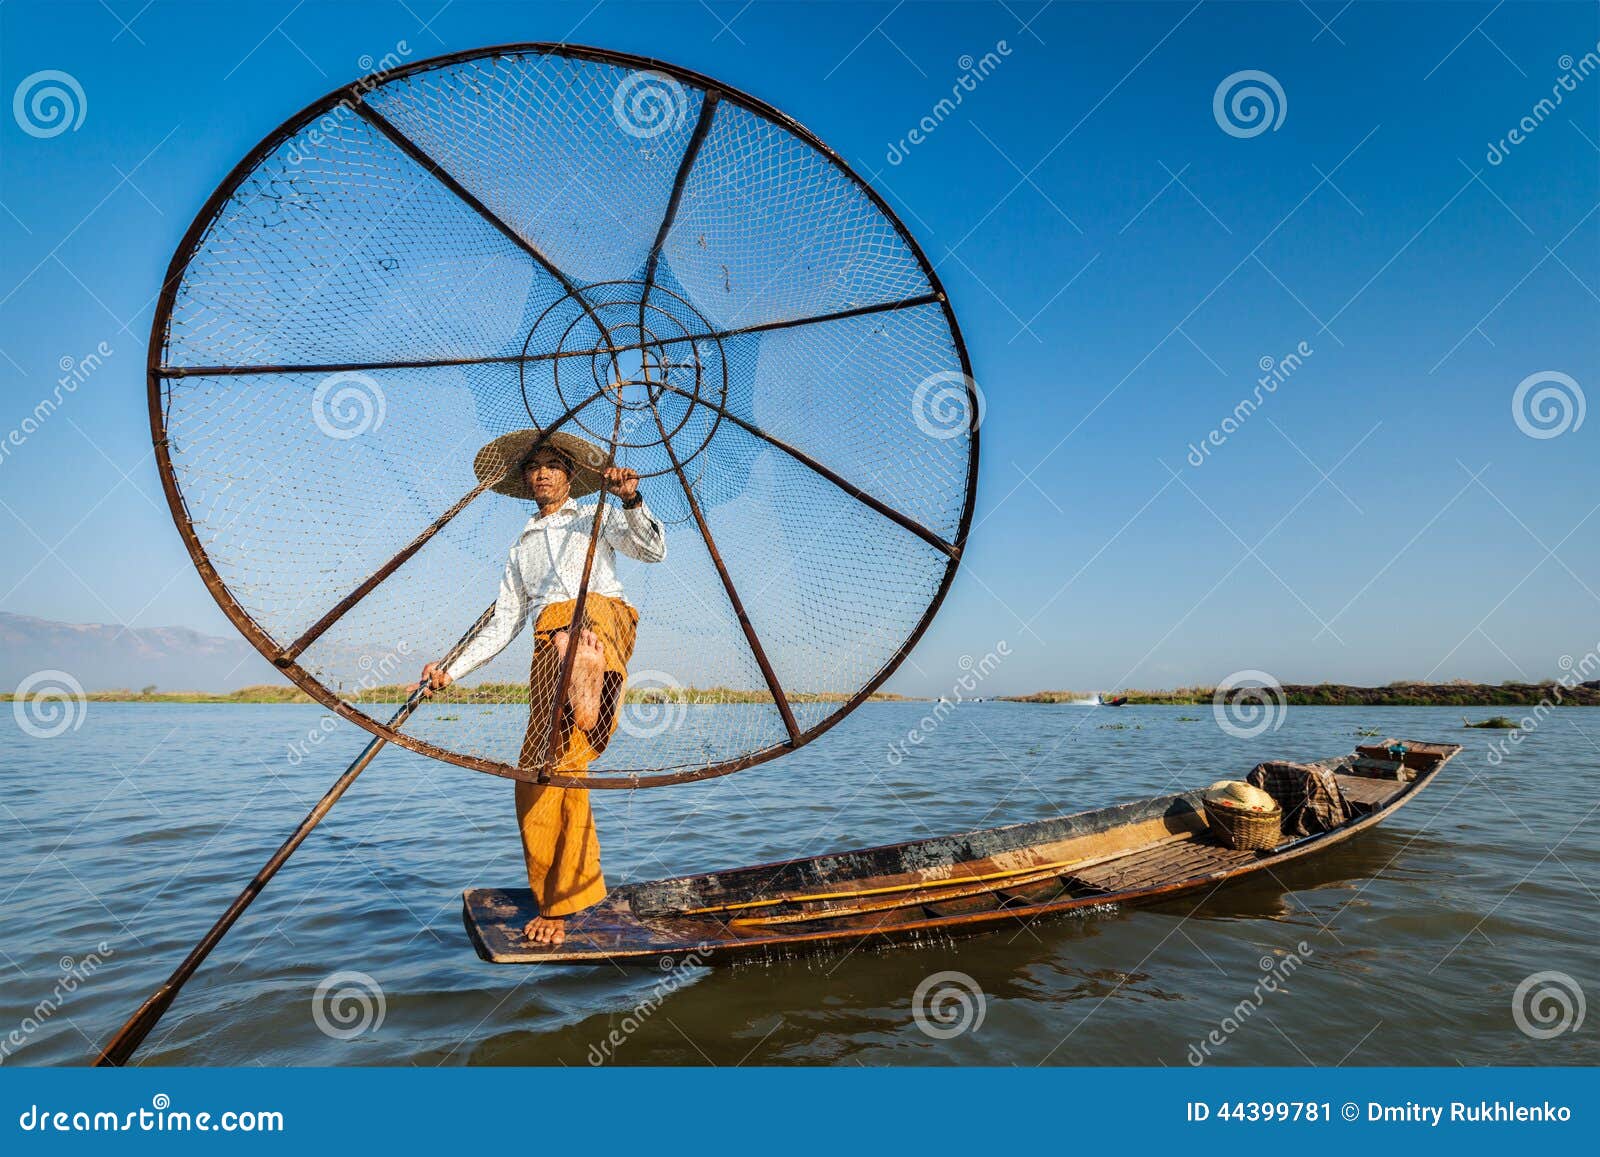 burmese fisherman at inle lake, myanmar